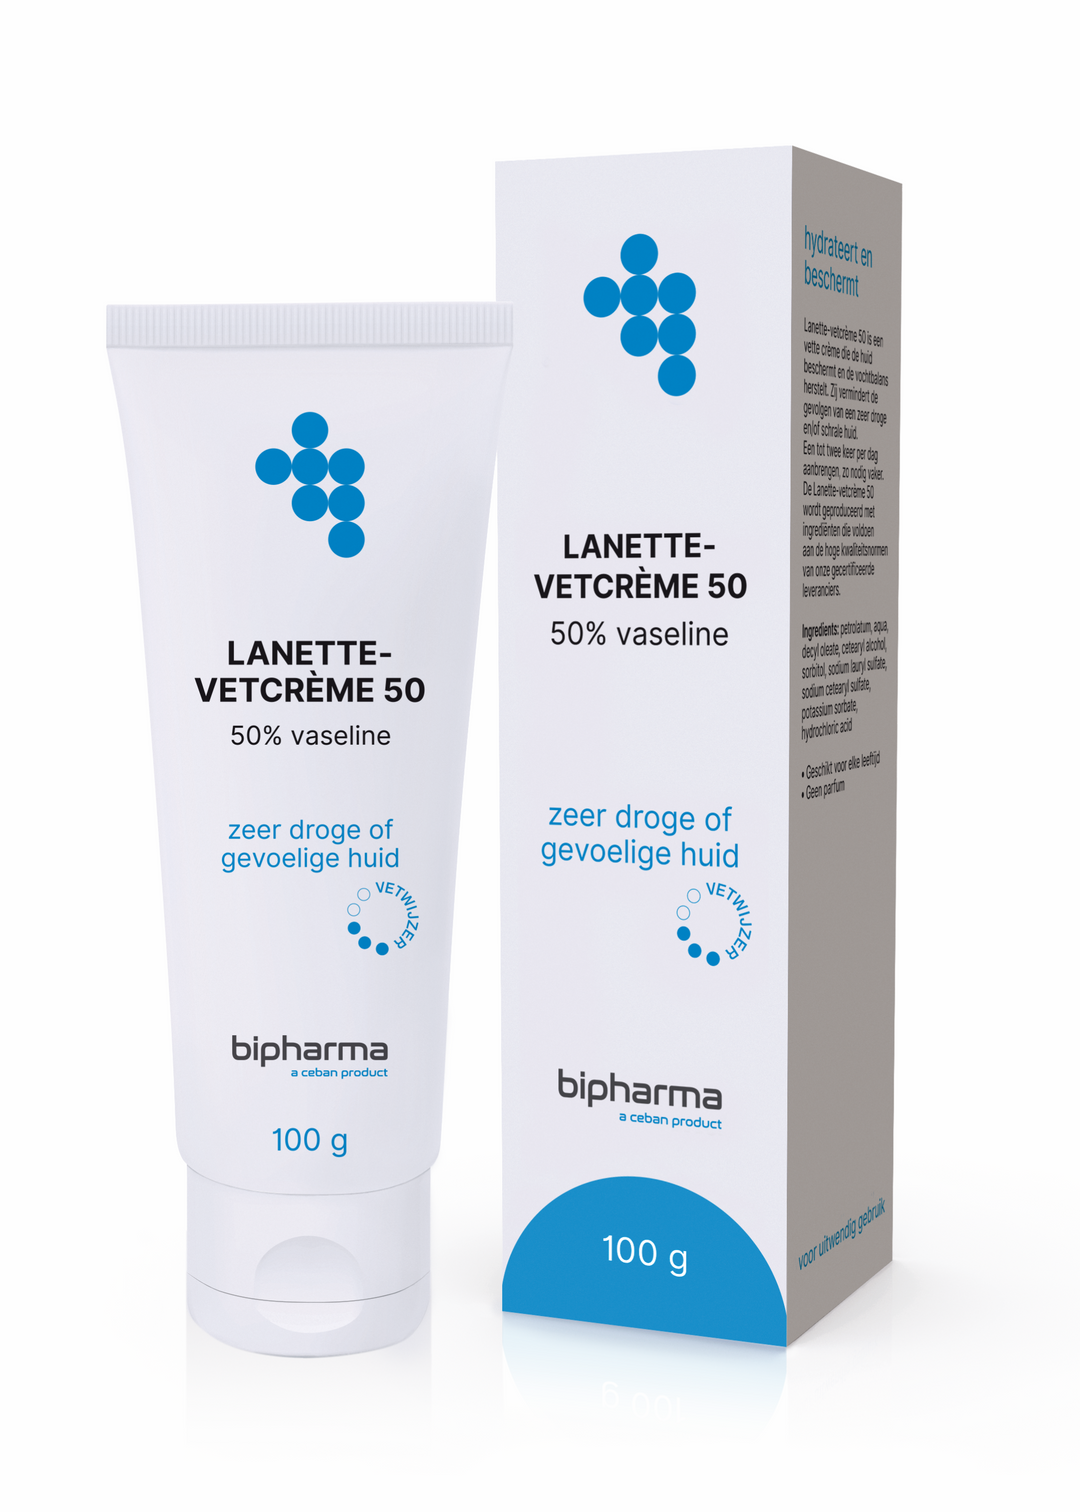 Bipharma Lanettecreme met 50% Vaseline - BIPHARMA BV - Huidproducten.nl